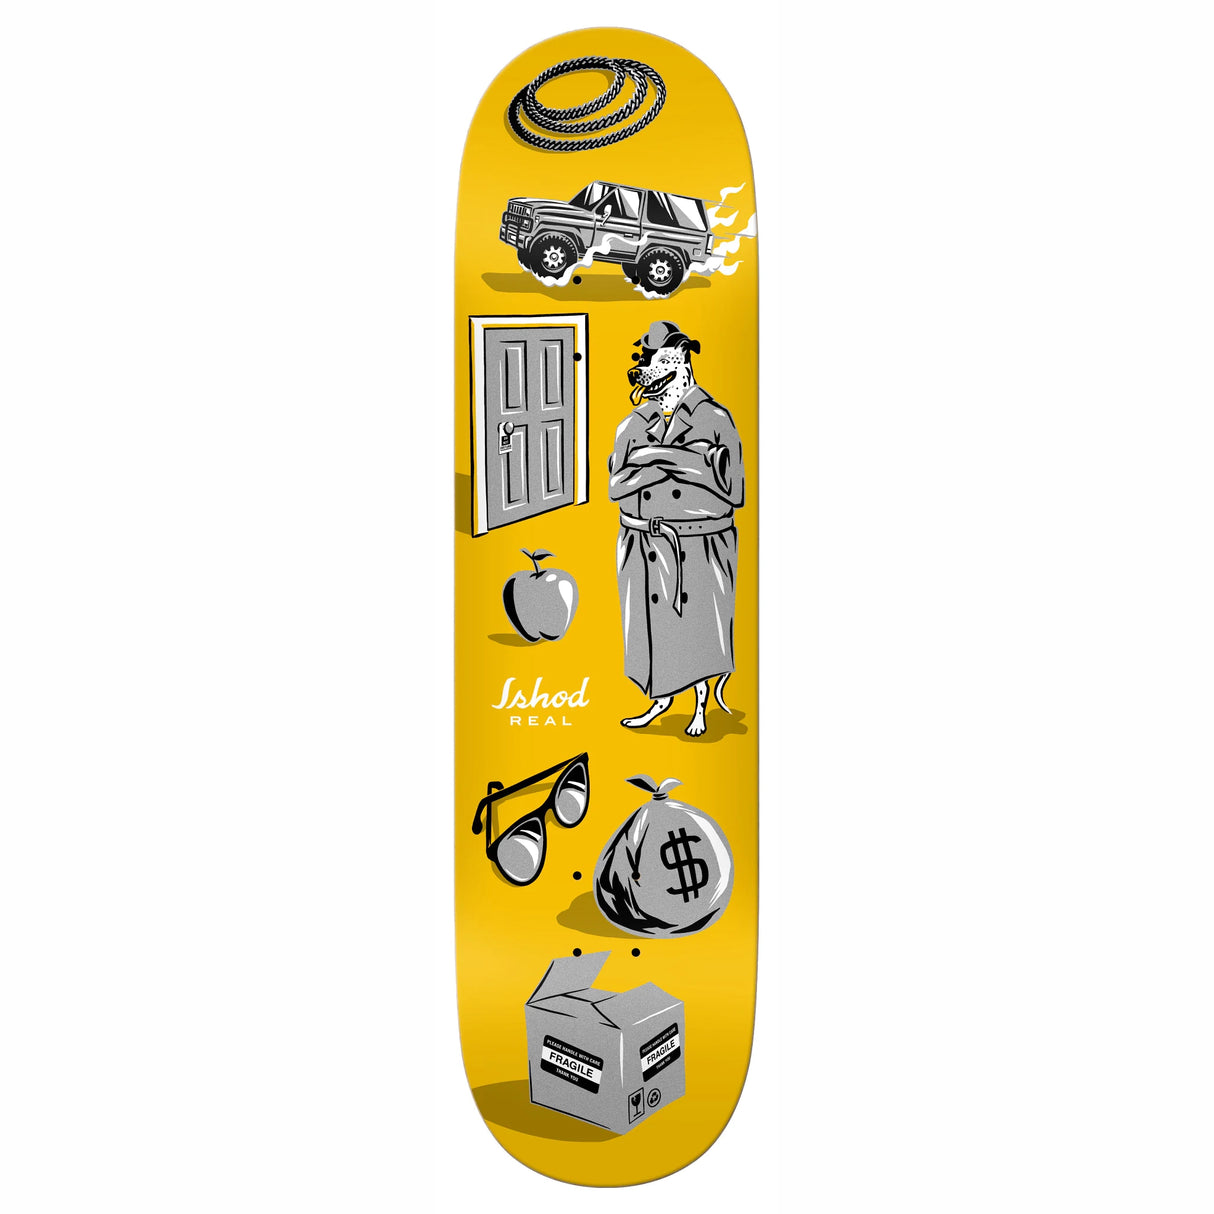 Real Ishod Revealing True-Fit 8.5" Skateboard Deck